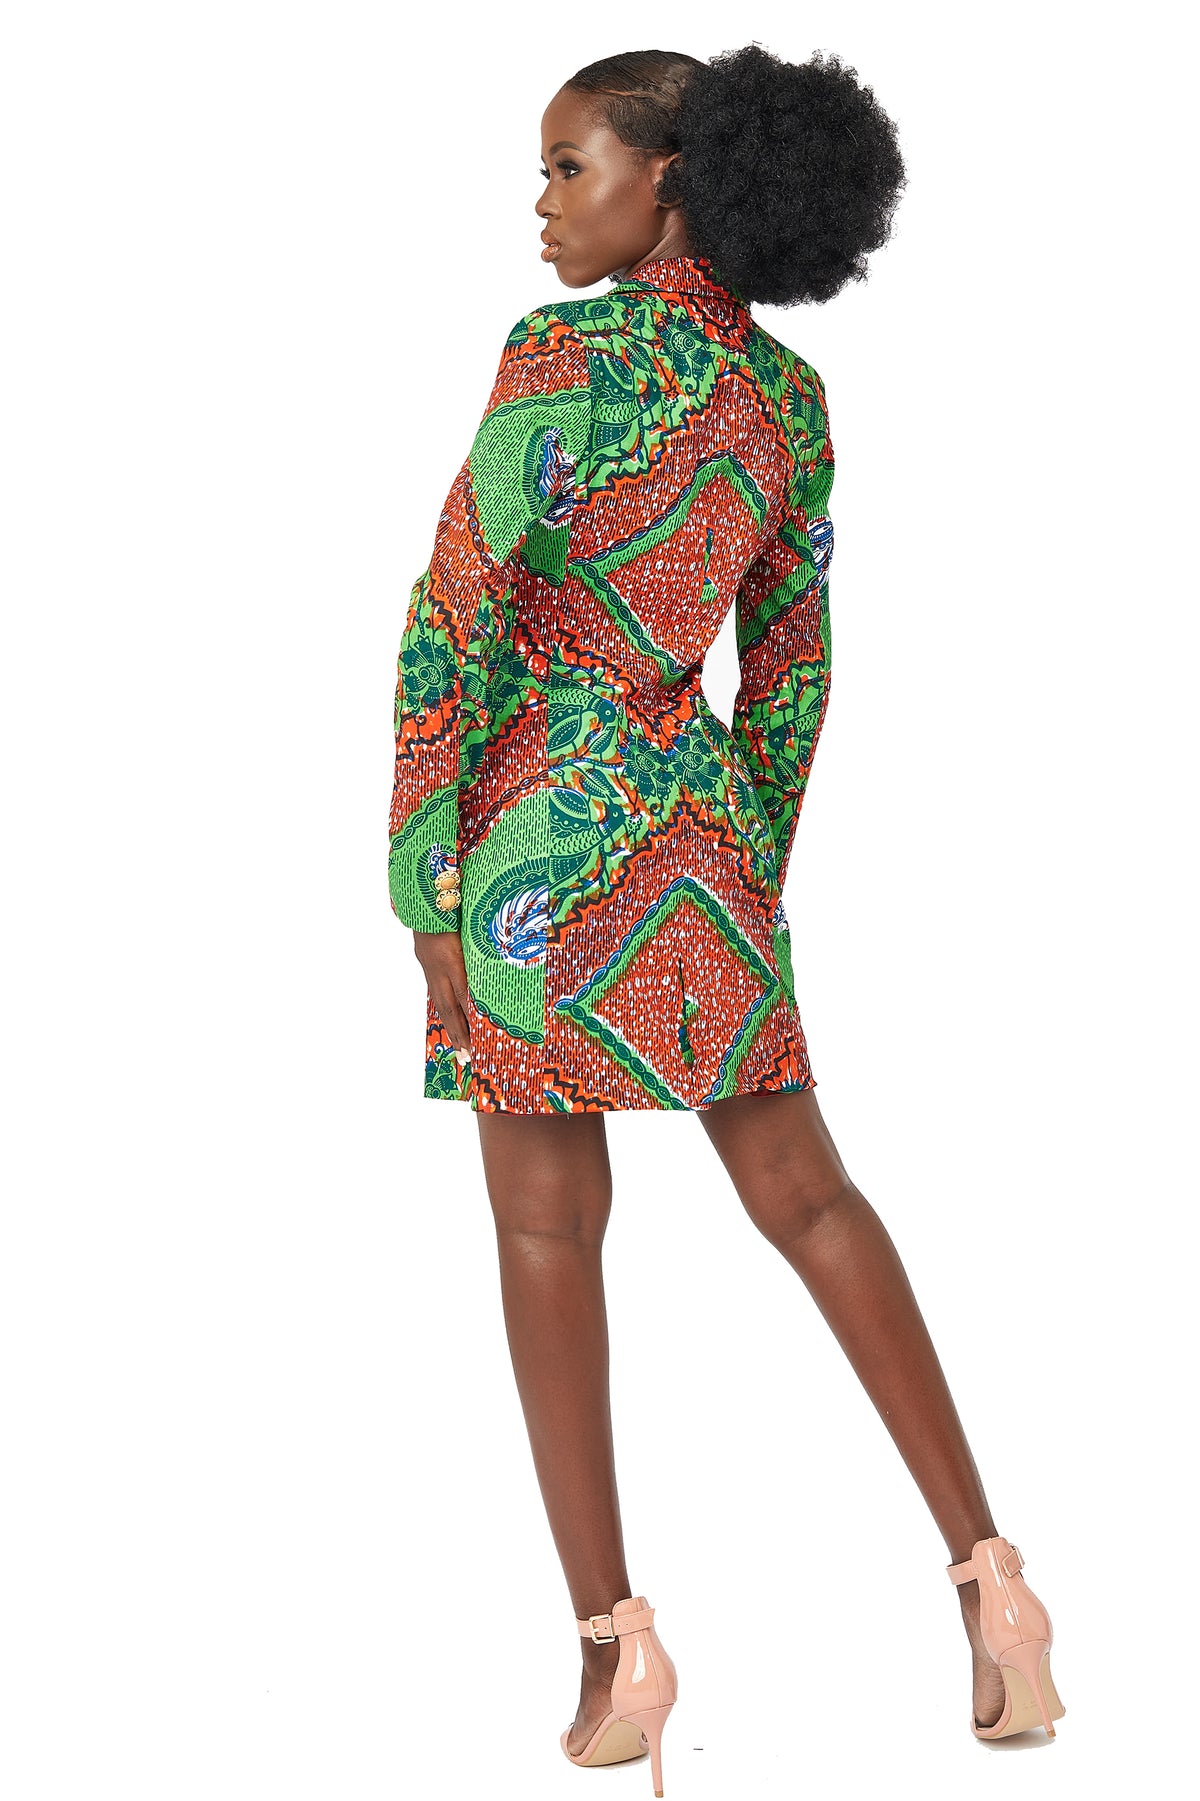 Jacqui Red African print blazer blazer dress - OHEMA OHENE AFRICAN INSPIRED FASHION